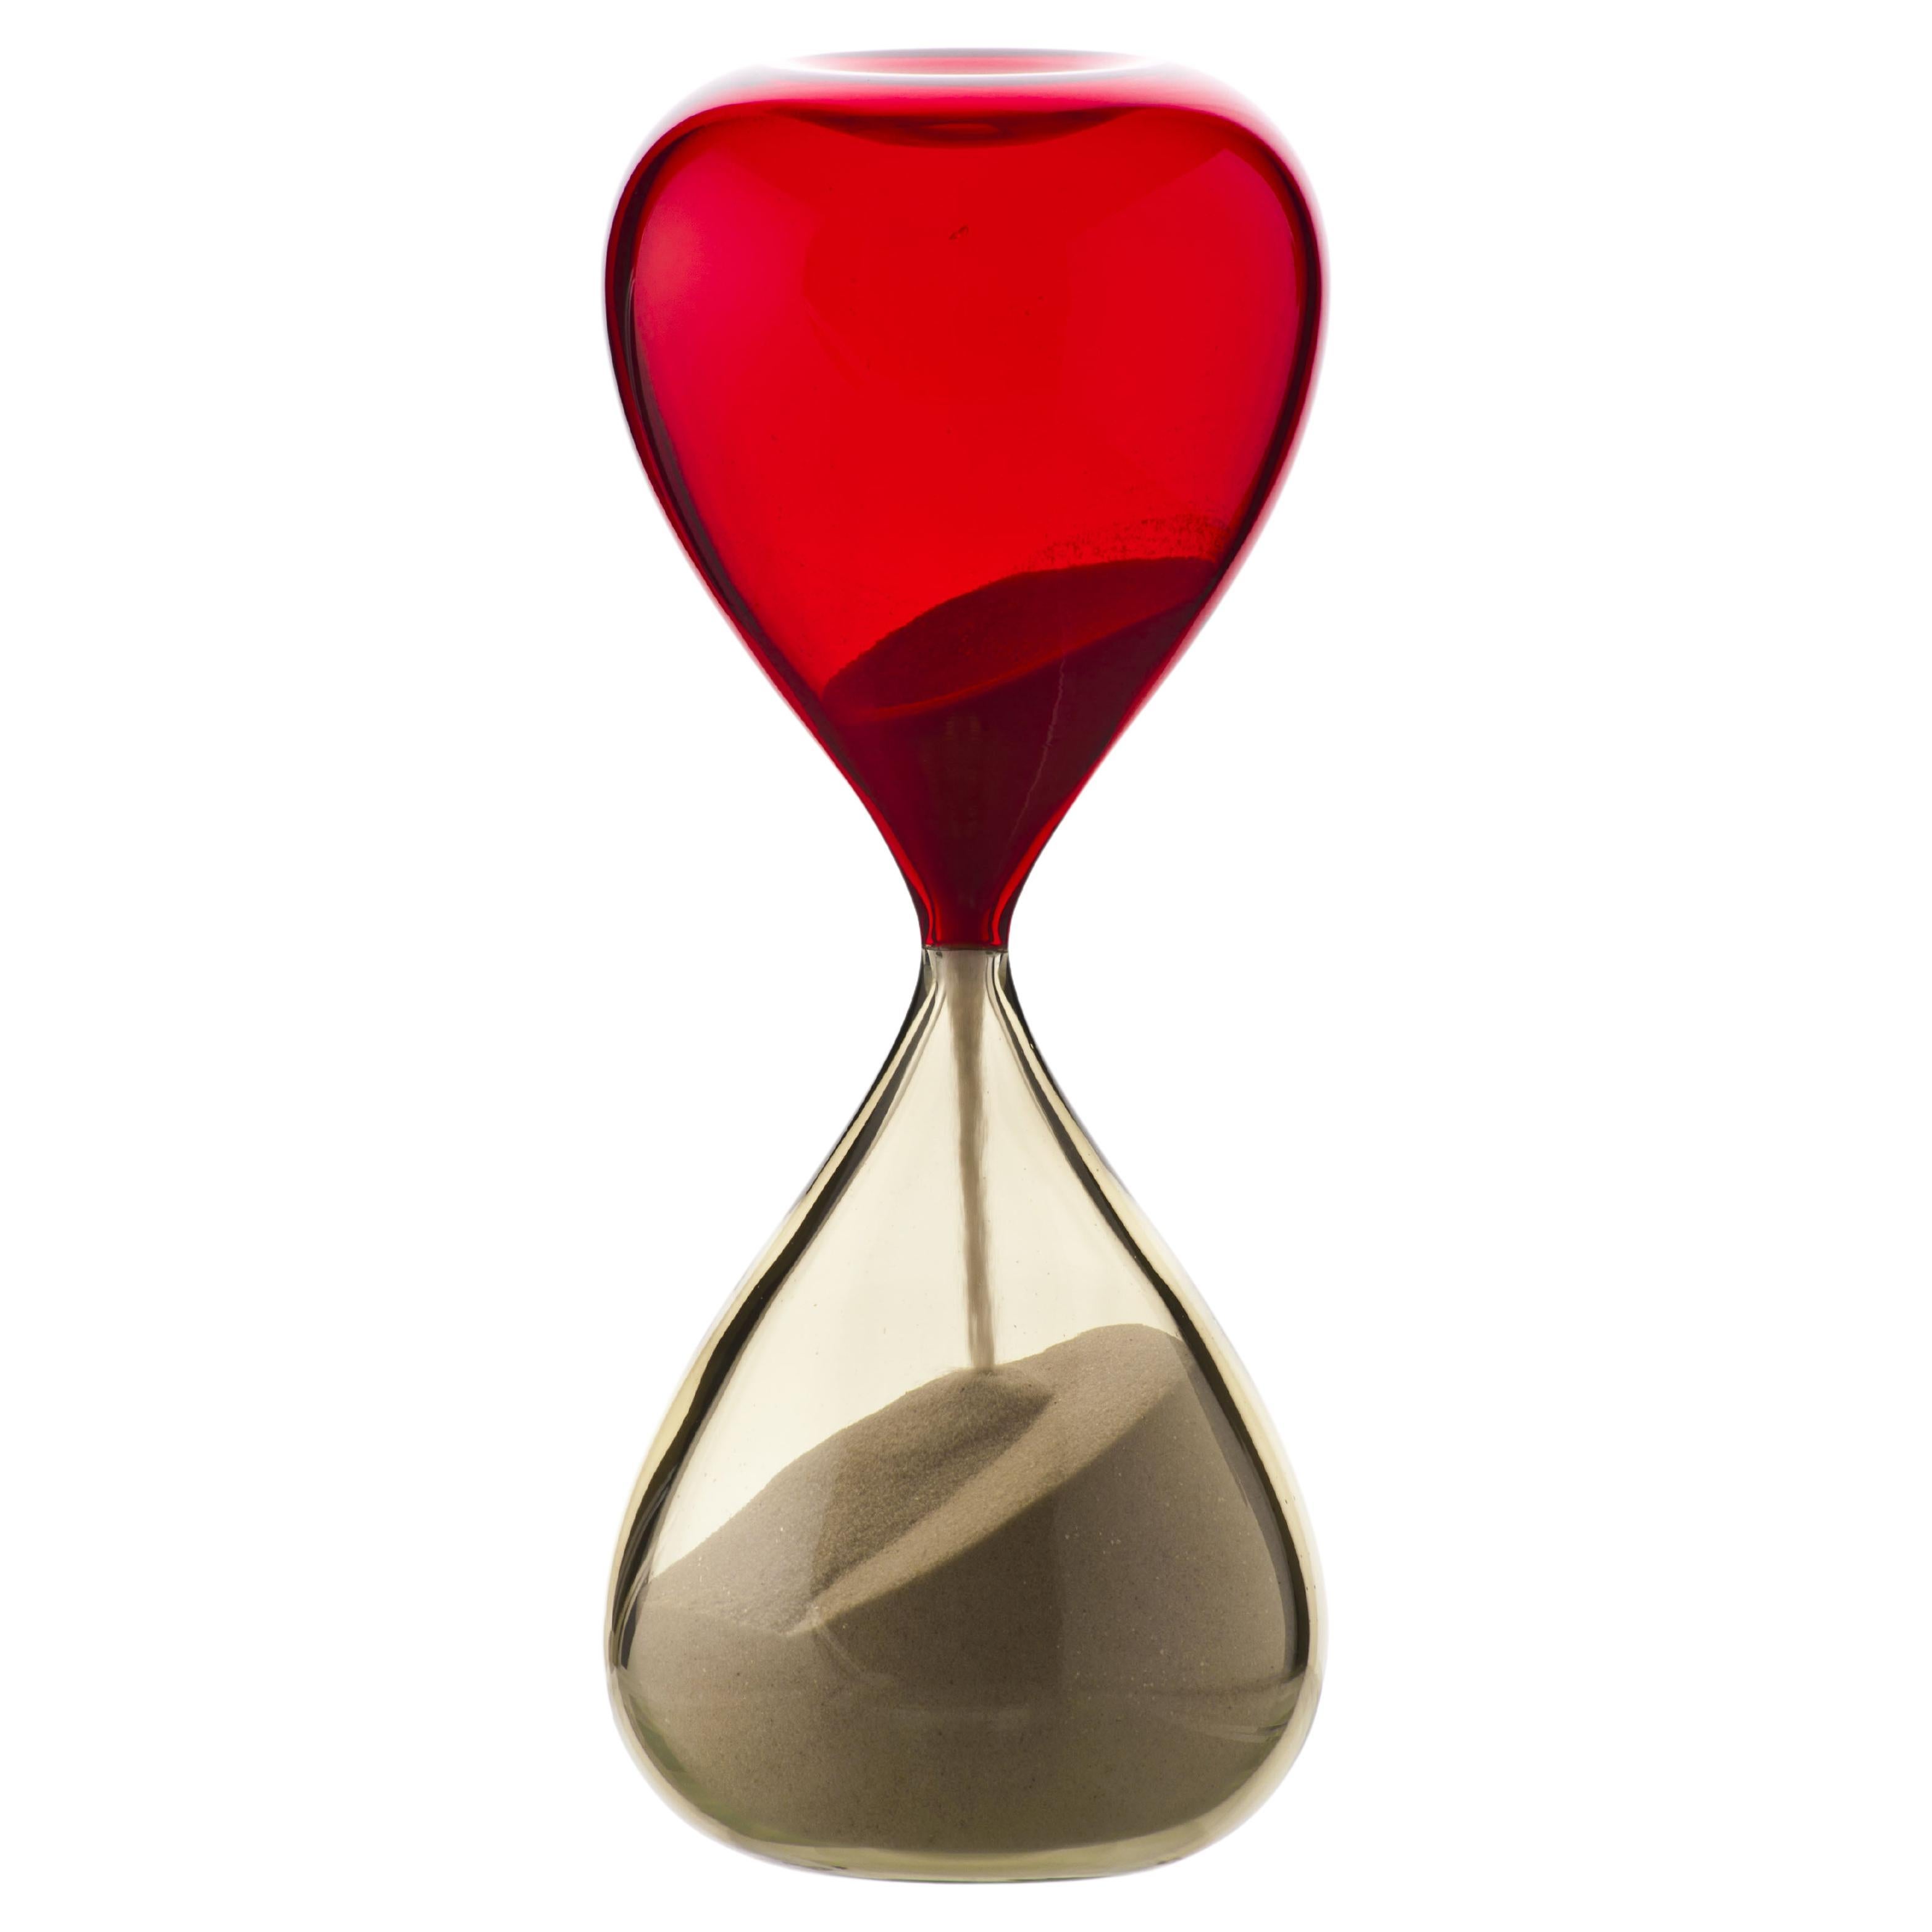 Lunette d'horloge Clessidra rouge de Venini  Verre de Murano jaune paille